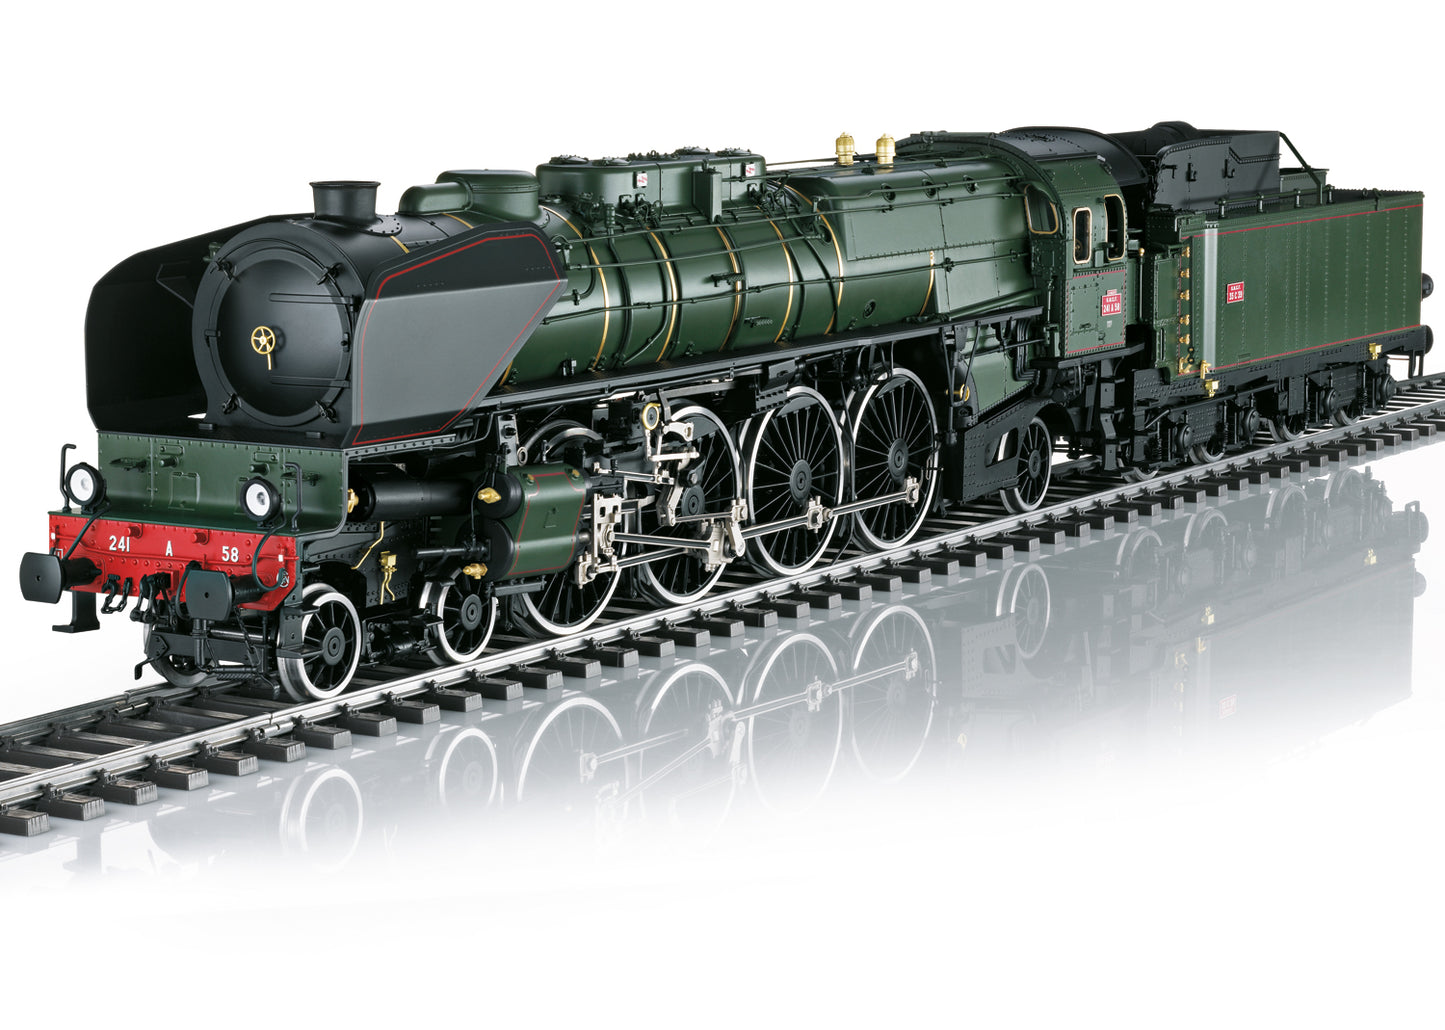 Marklin 1 55085 Class 241-A-58 Steam Locomotive 2021 New Item